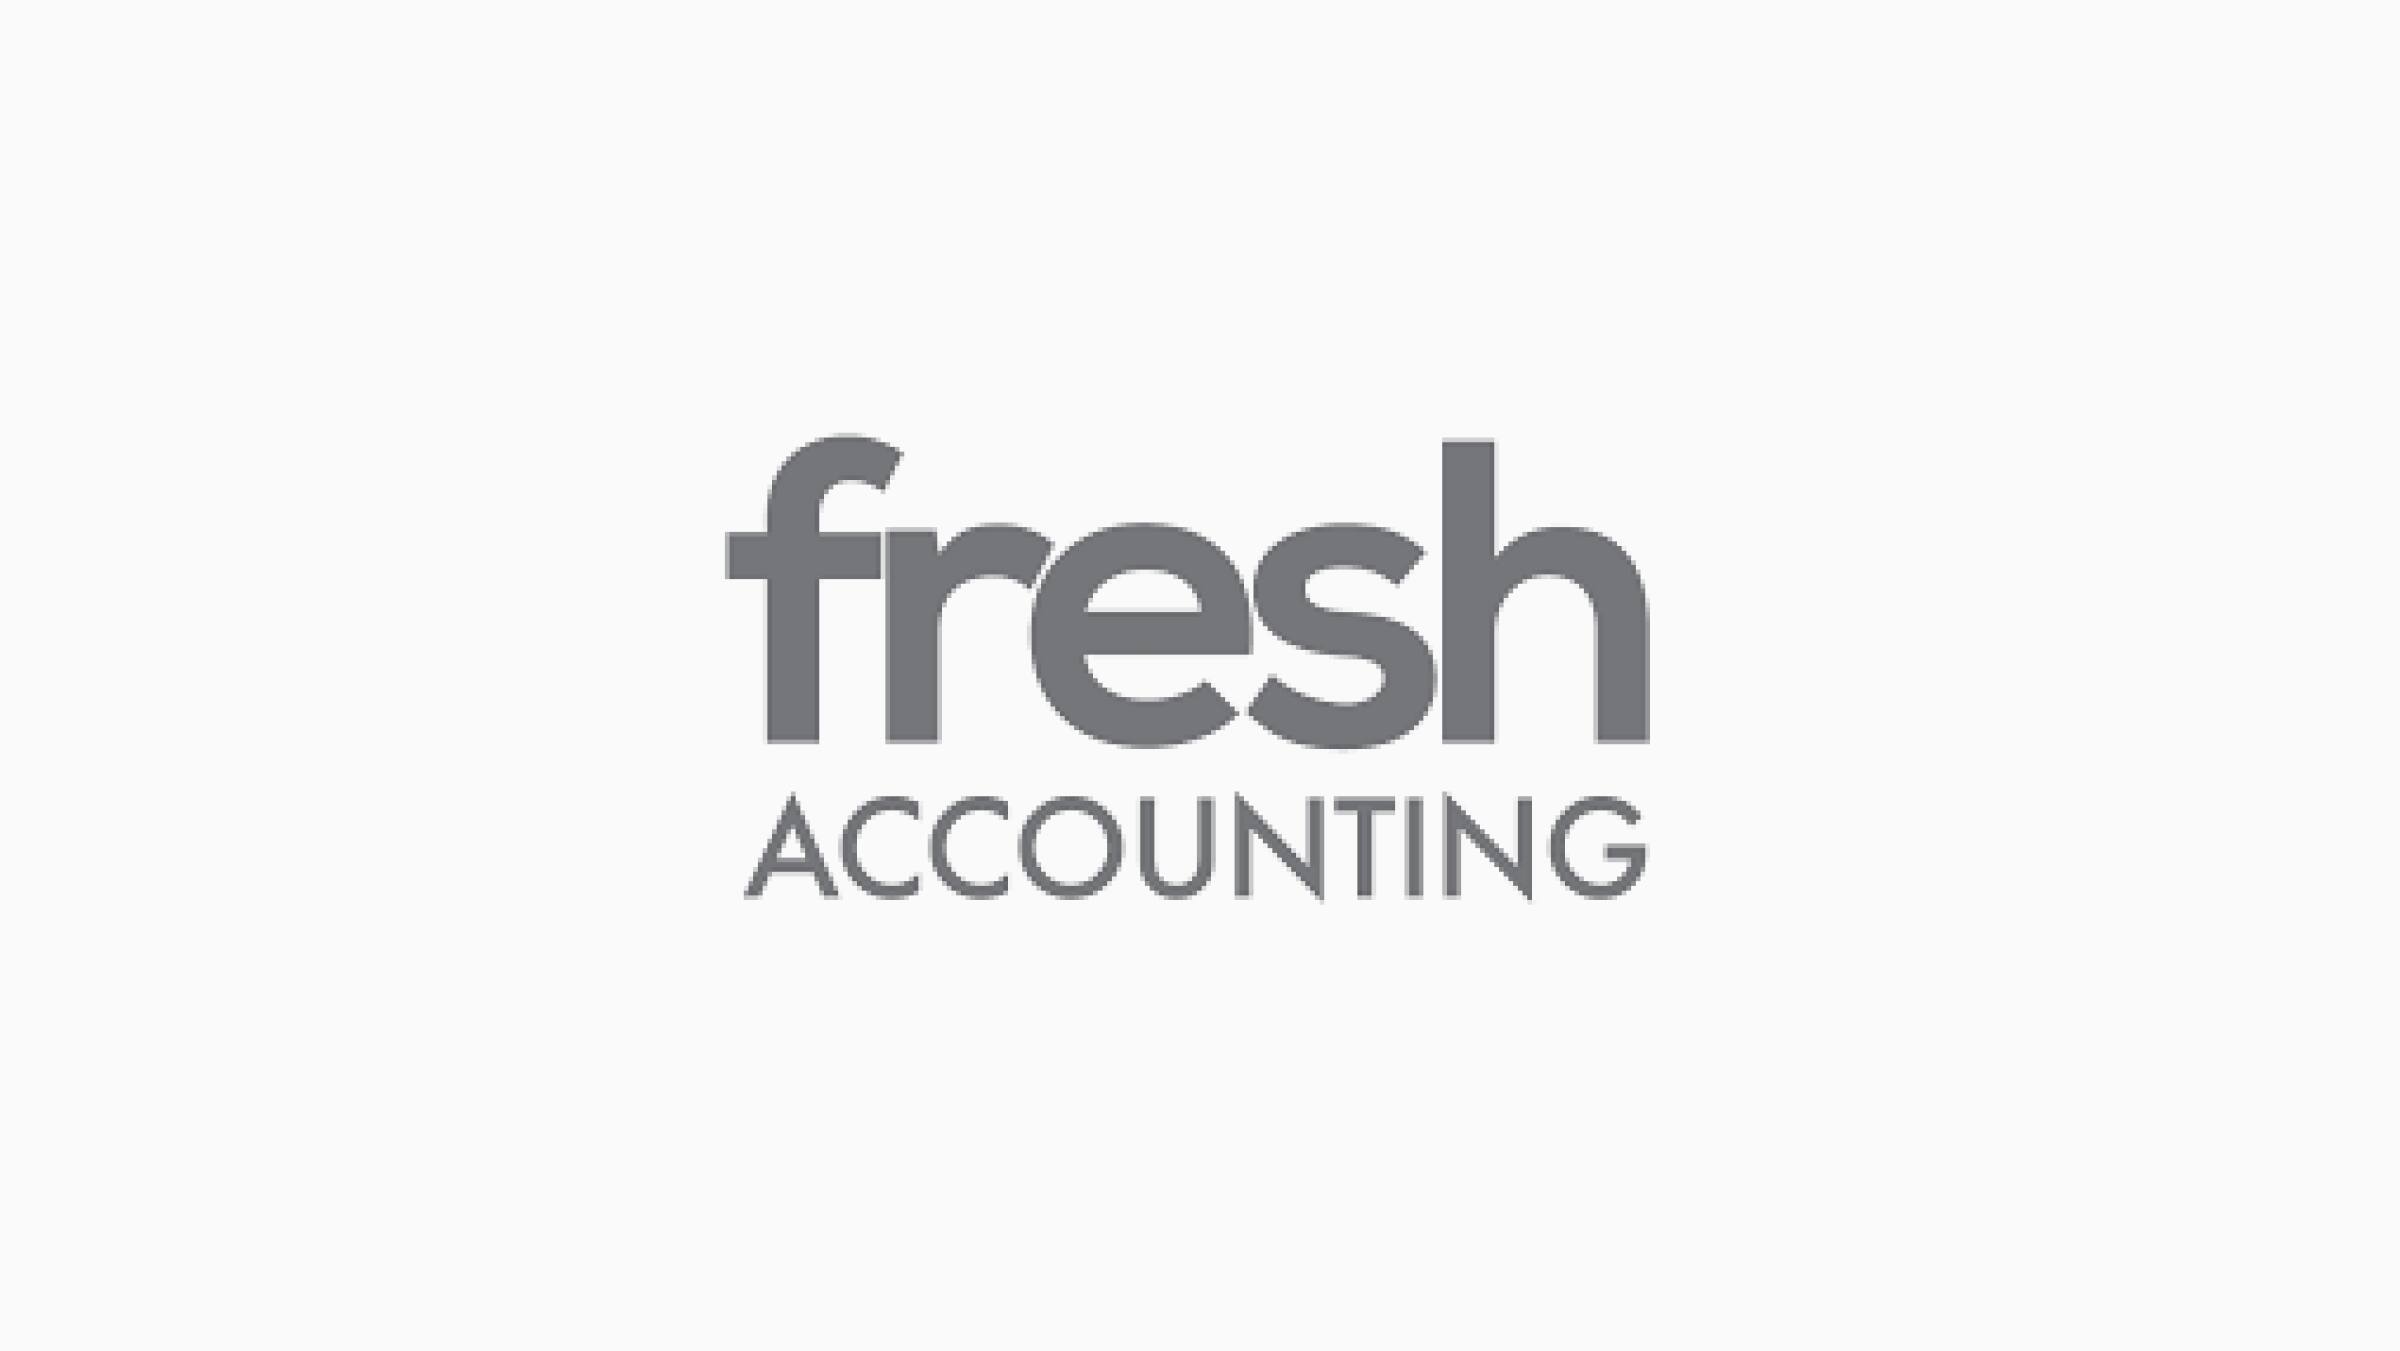 The Fresh Accounting logo